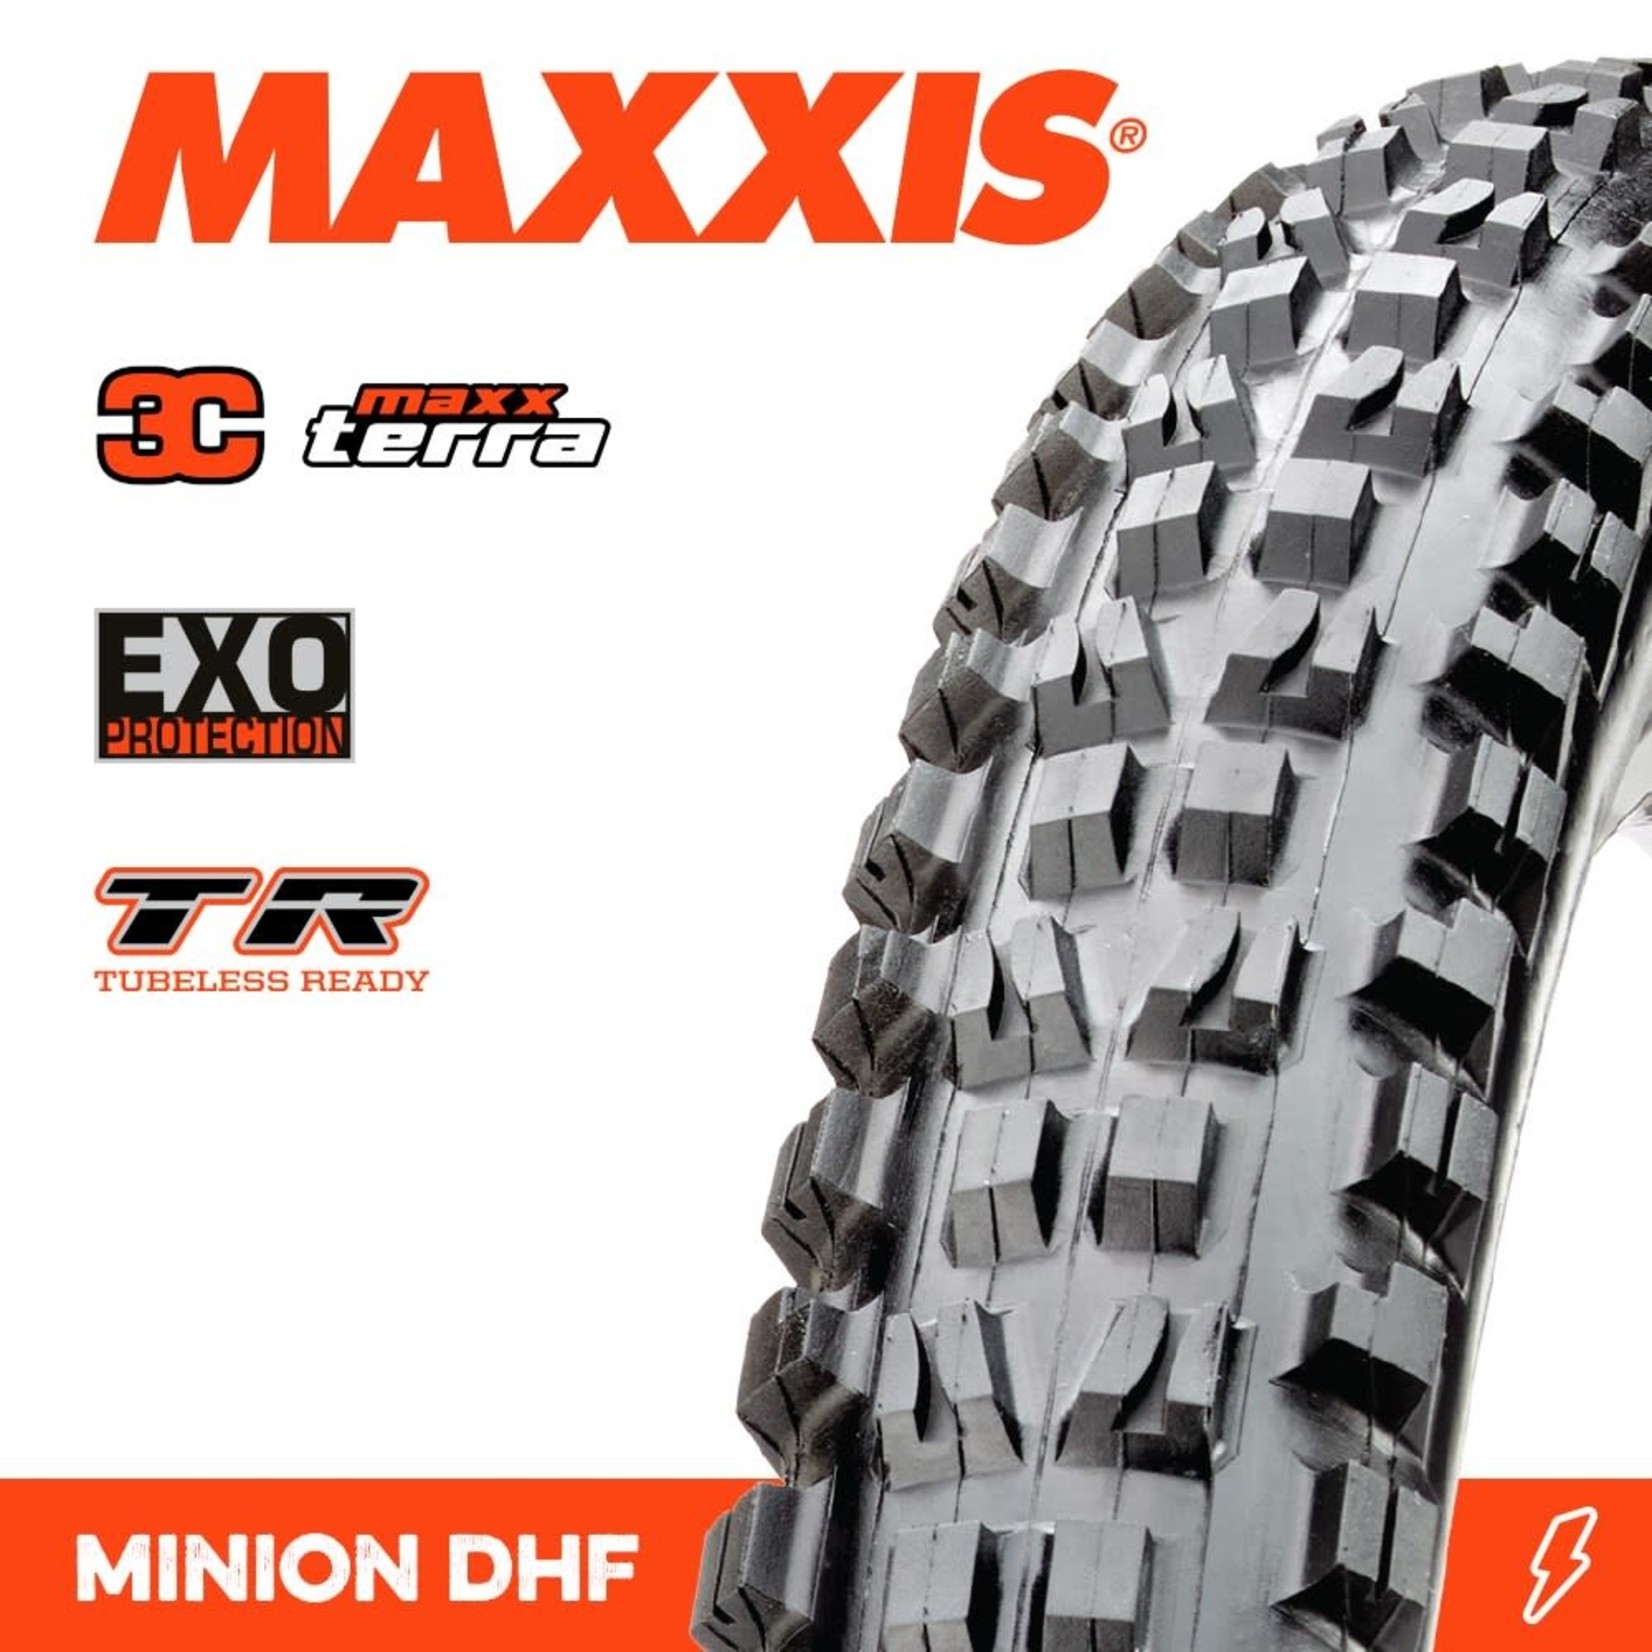 Maxxis Maxxis Minion DHF Bike Tyre - 24 X 2.40 - 3C Terra Exo TR Folding 120TPI - Pair